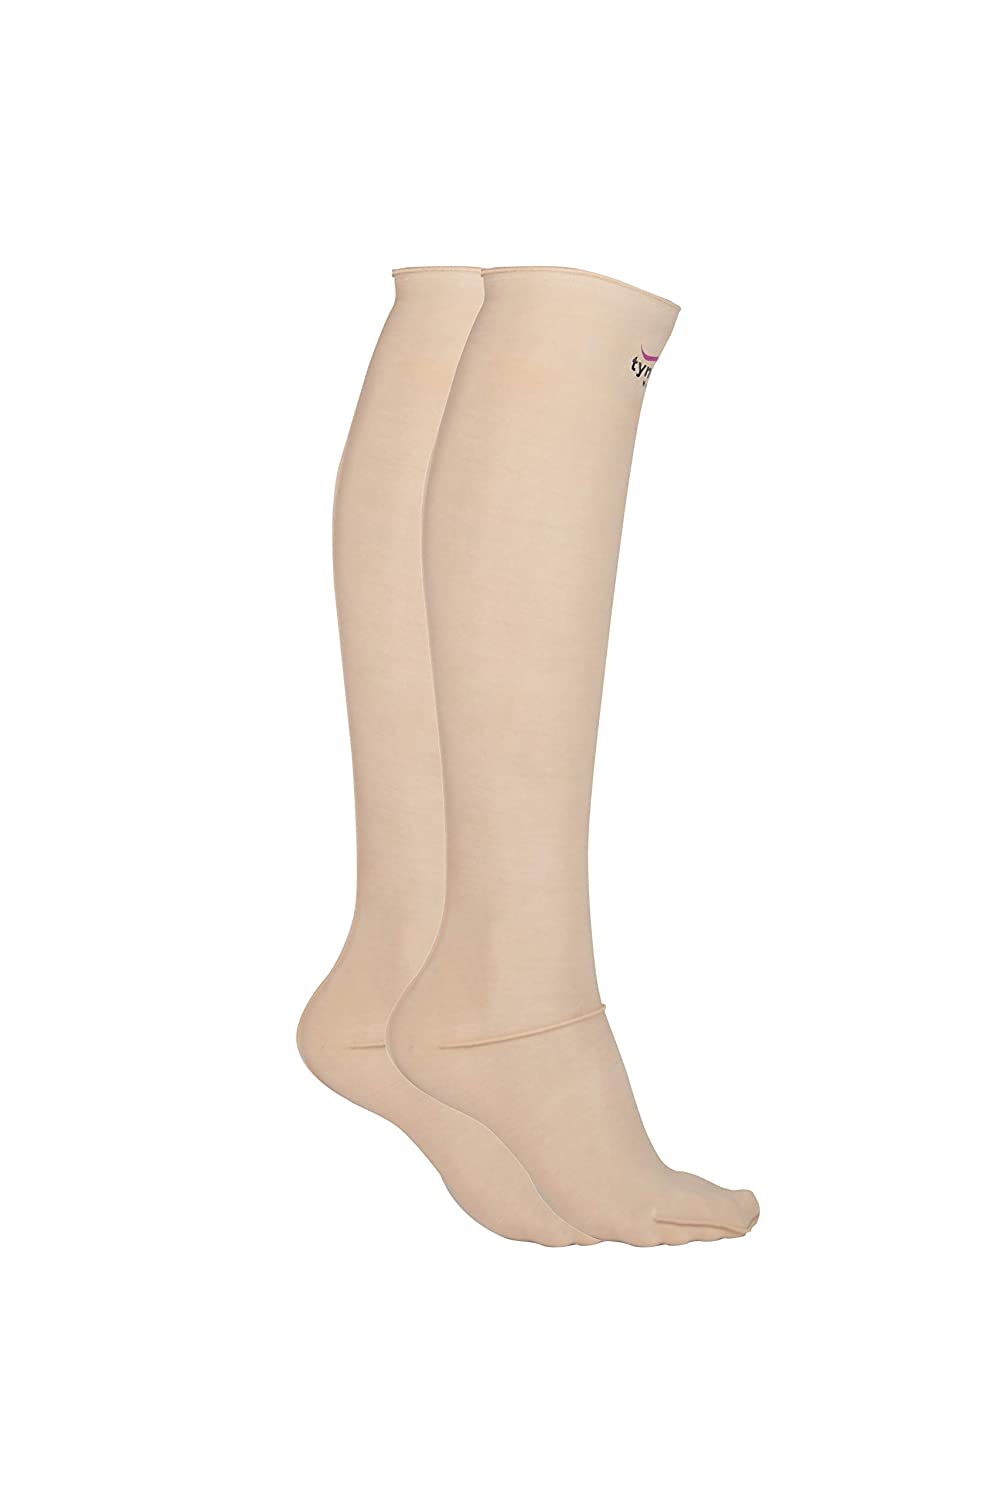 AHS Compression Stockings Leg Below Knee (Closed Toe) 20-30mmHg-3